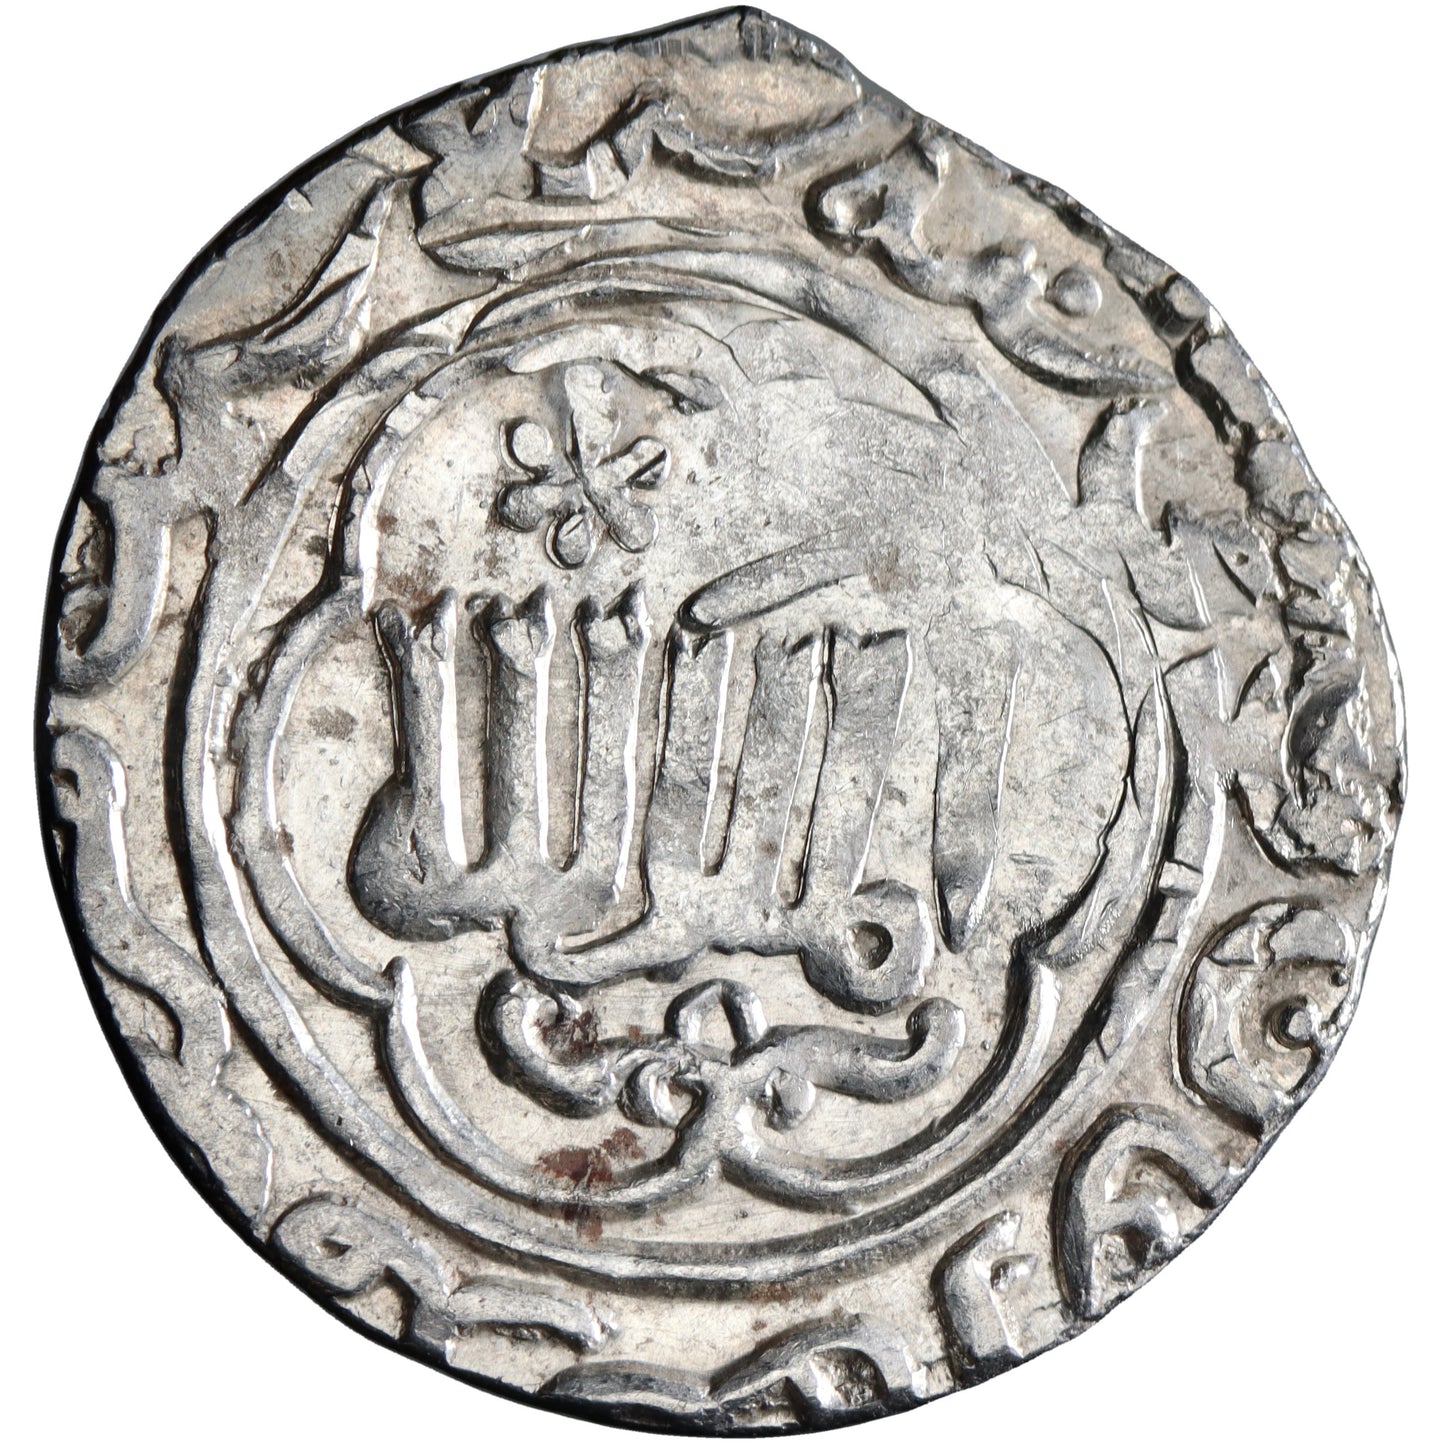 Seljuq of Rum, Kaykhusraw III ibn Qilij Arslan, silver dirham, Erzinjan (Erzincan) mint, AH 670